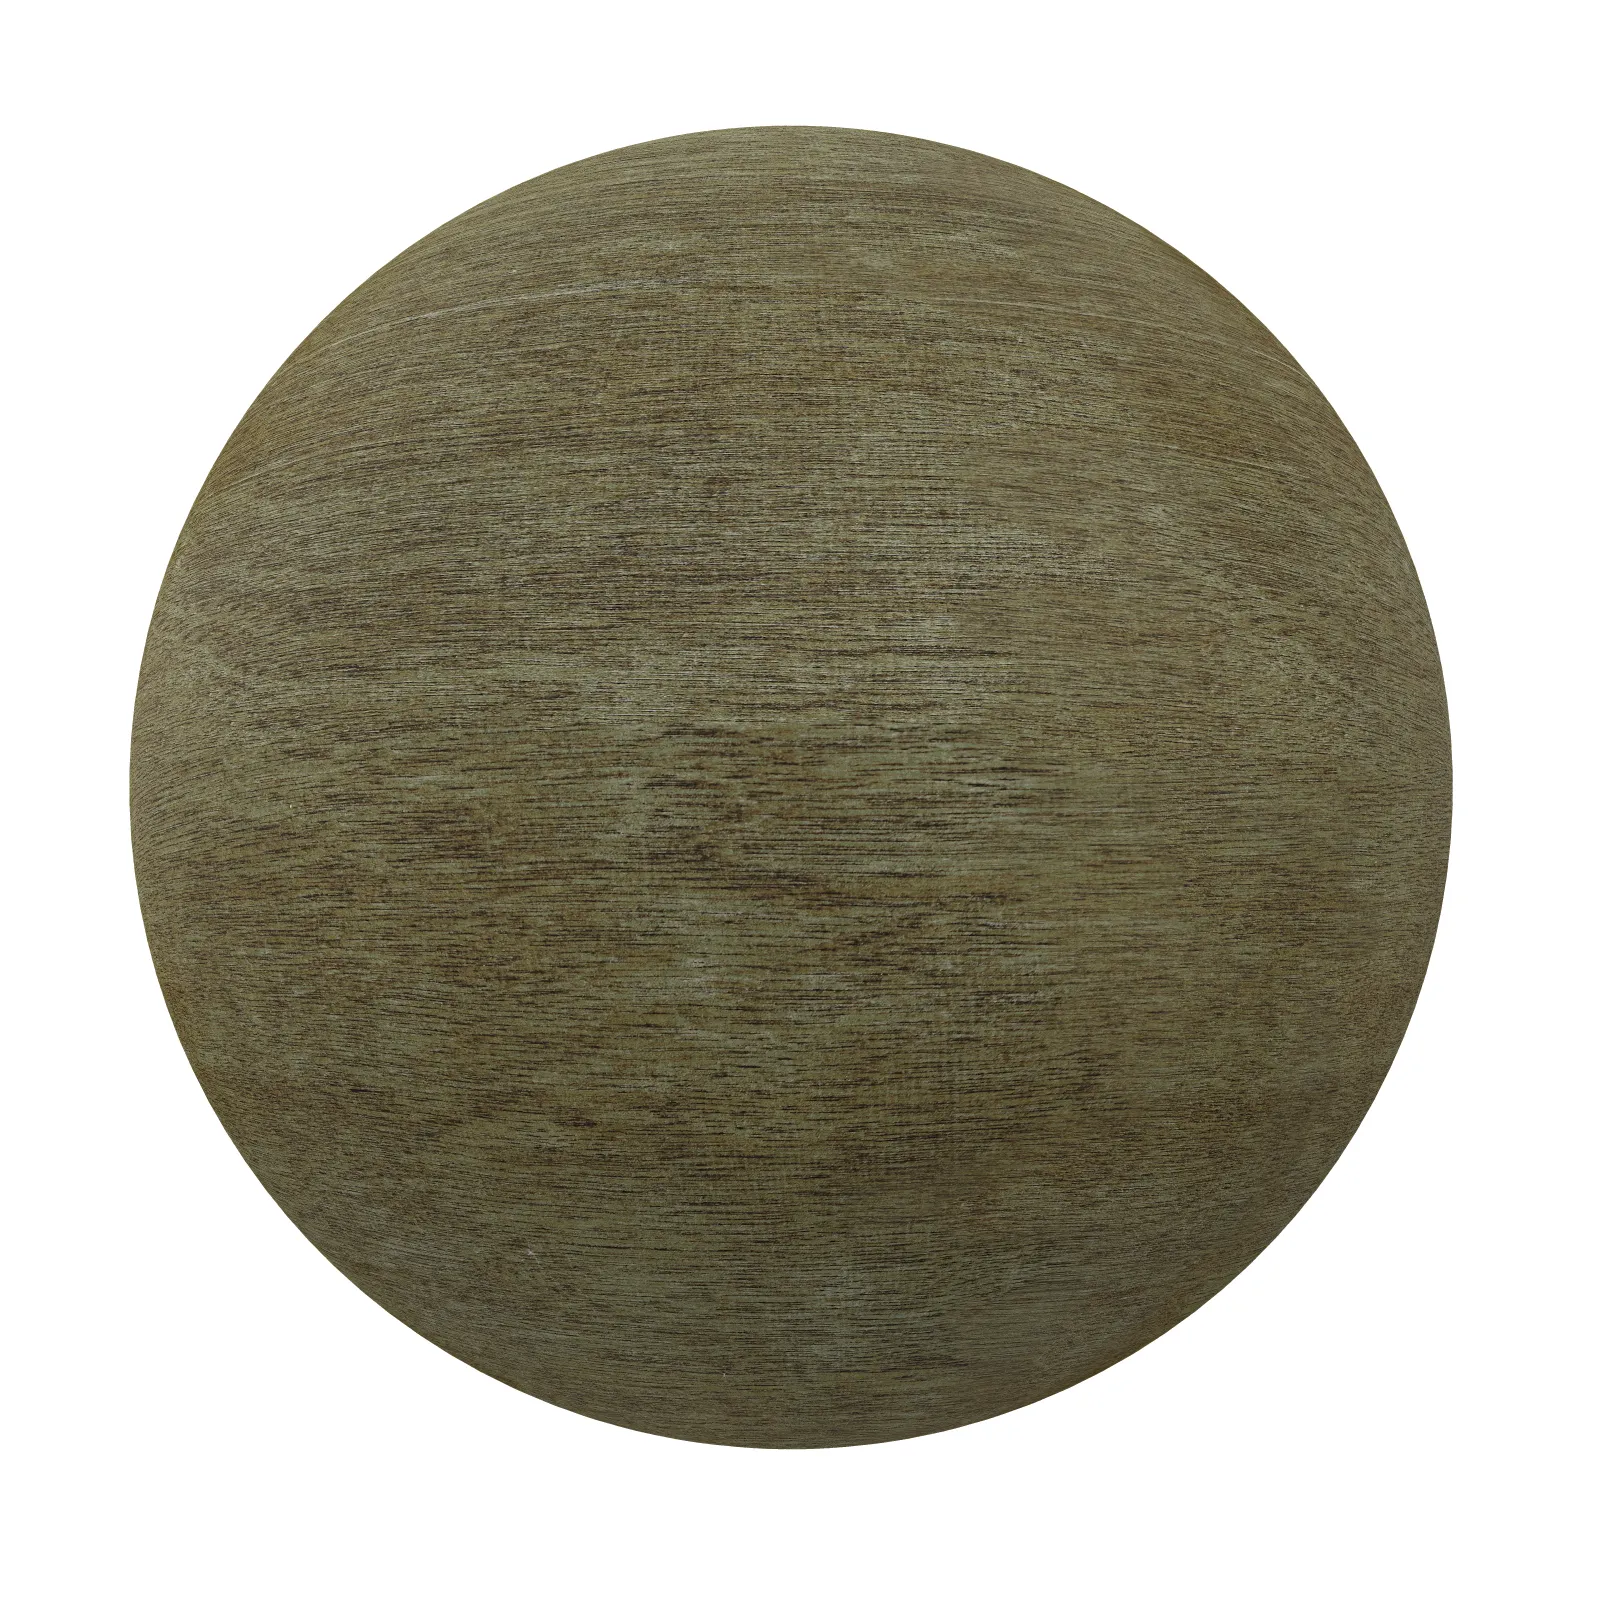 3ds Max Files – Texture – 8 – Wood Texture – 117 – Wood Texture by Minh Nguyen